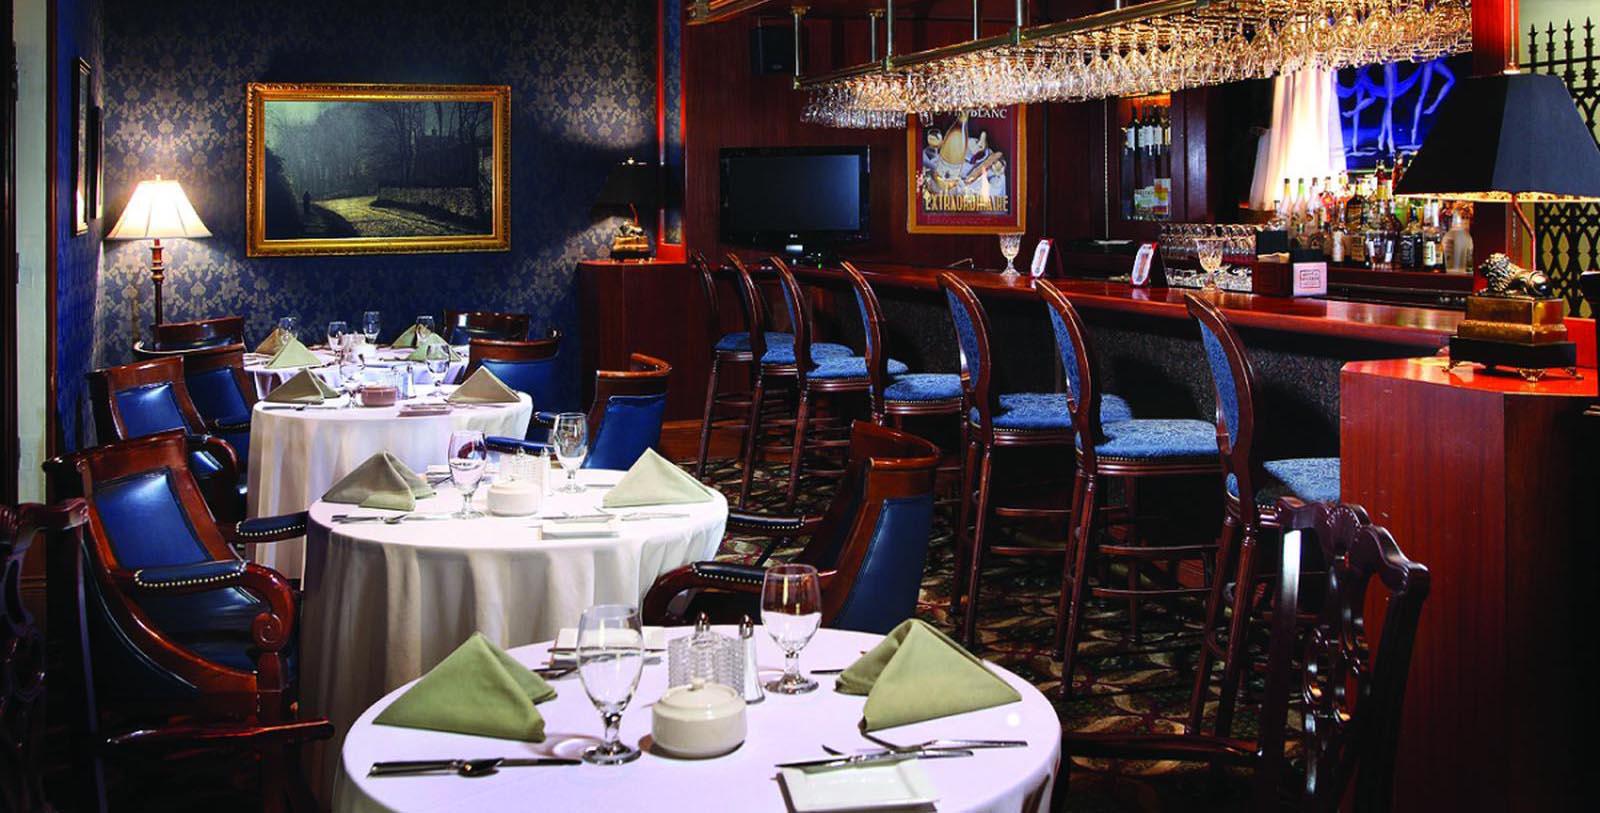 Image of Brumleys Restaurant at General Morgan Inn & Conference Center, 1884, Member of Historic Hotels of America, in Greeneville, Tennessee, Taste